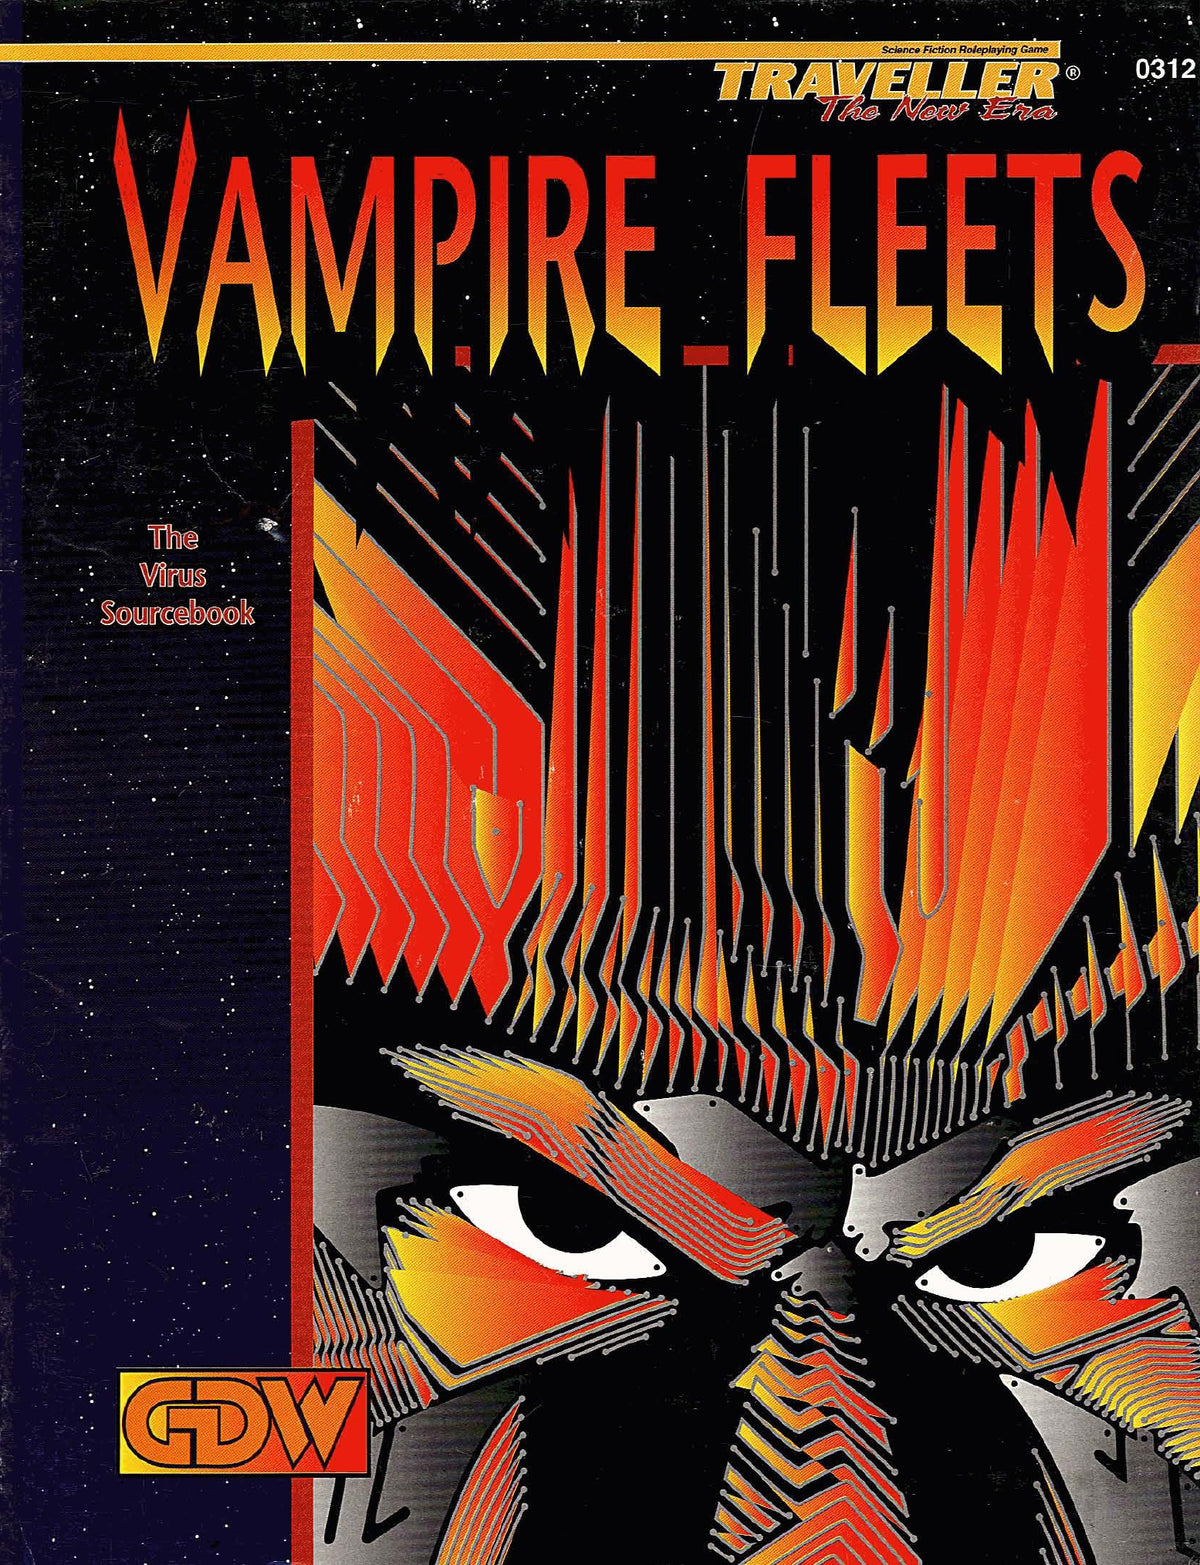 Vampire Fleets ebook